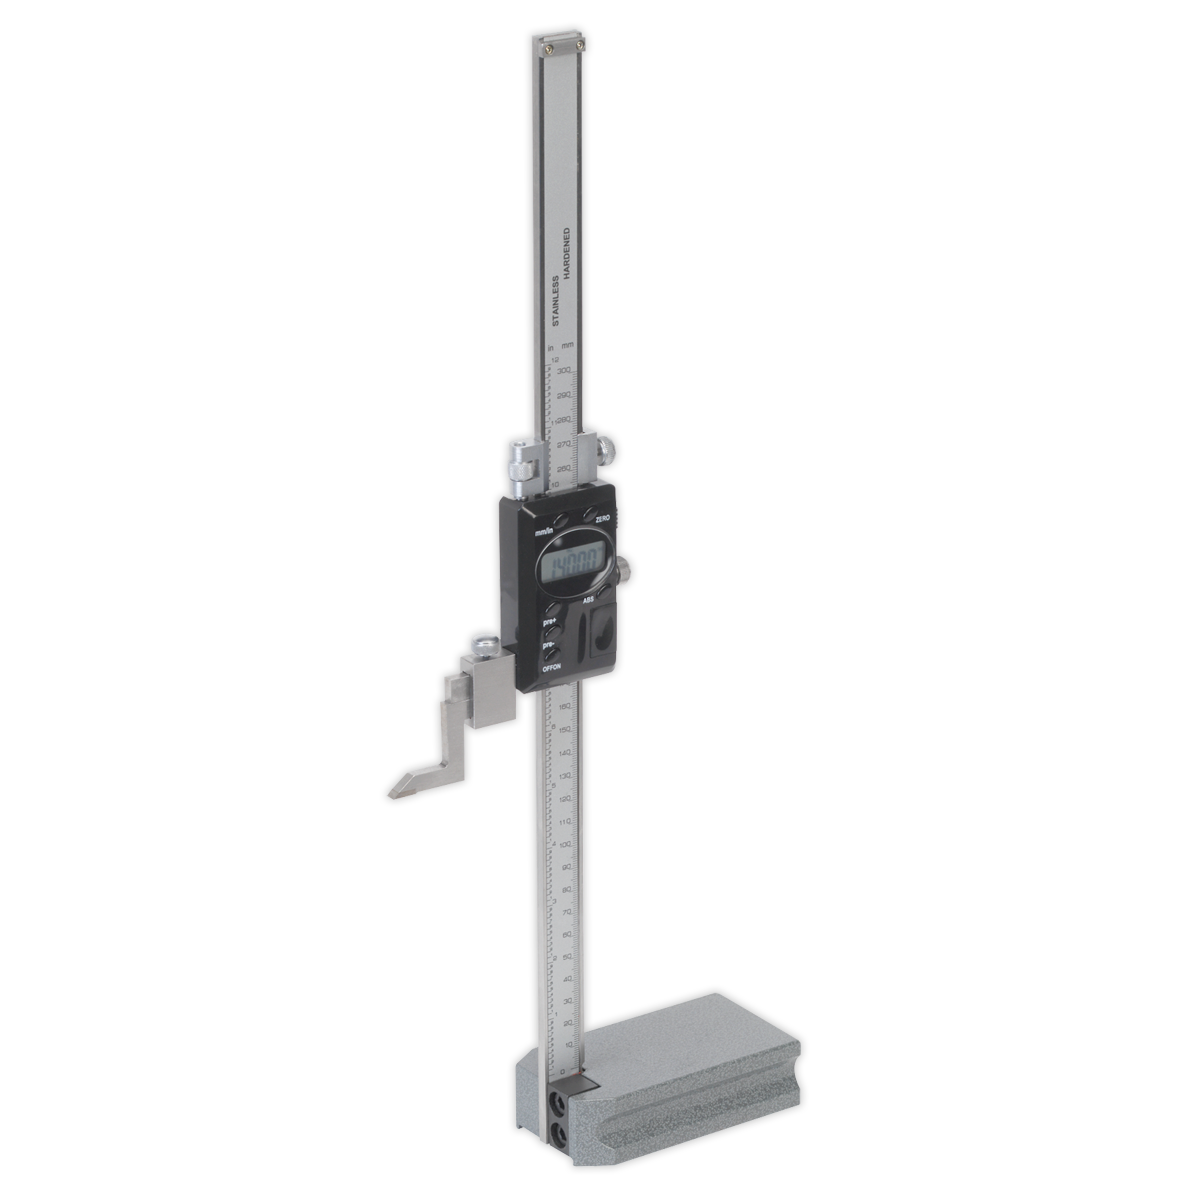 Sealey 0-300mm(0-12") Digital Height Gauge AK9636D